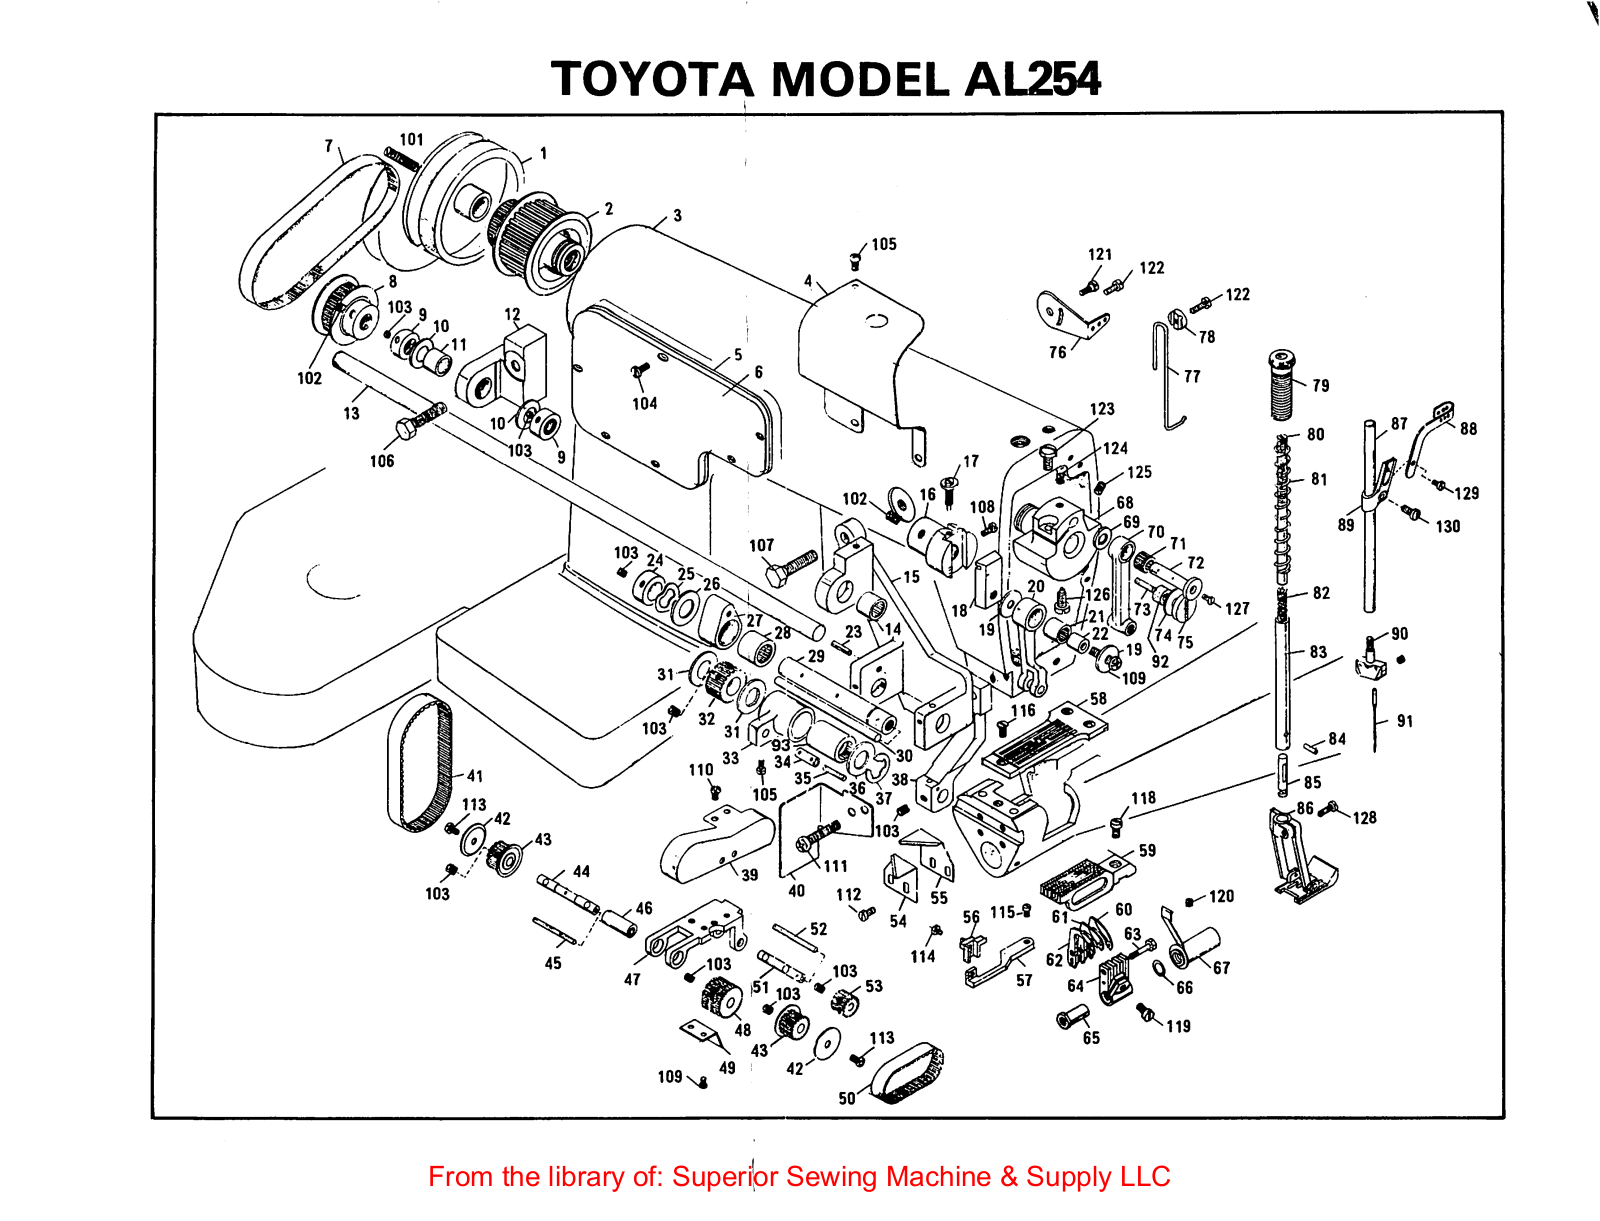 Toyota AL254 Manual